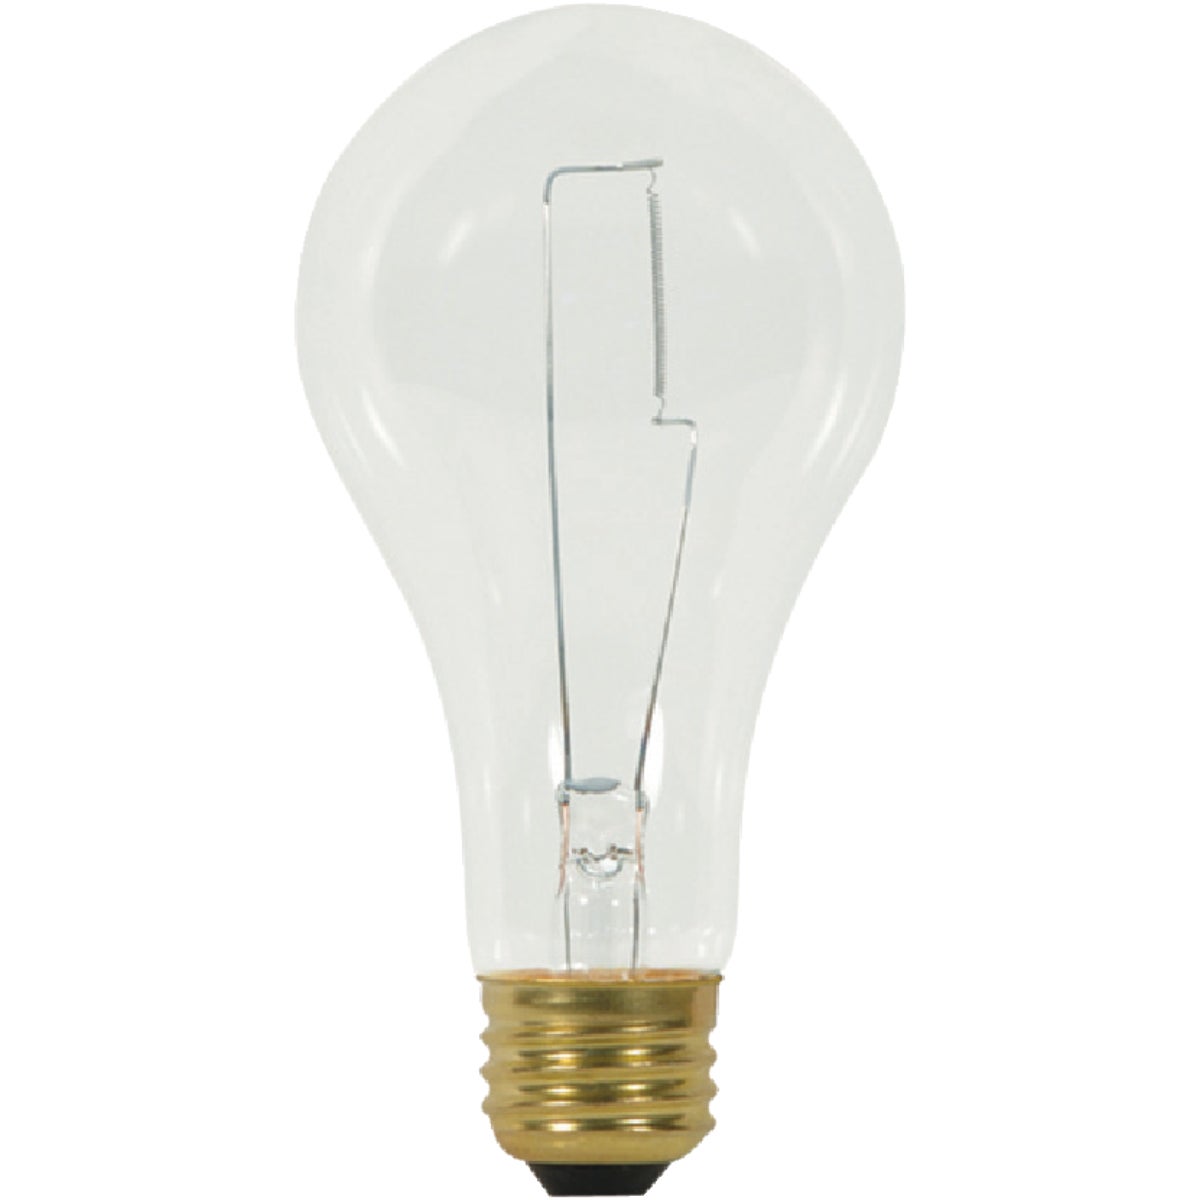 Incandescent A-Line Light Bulb